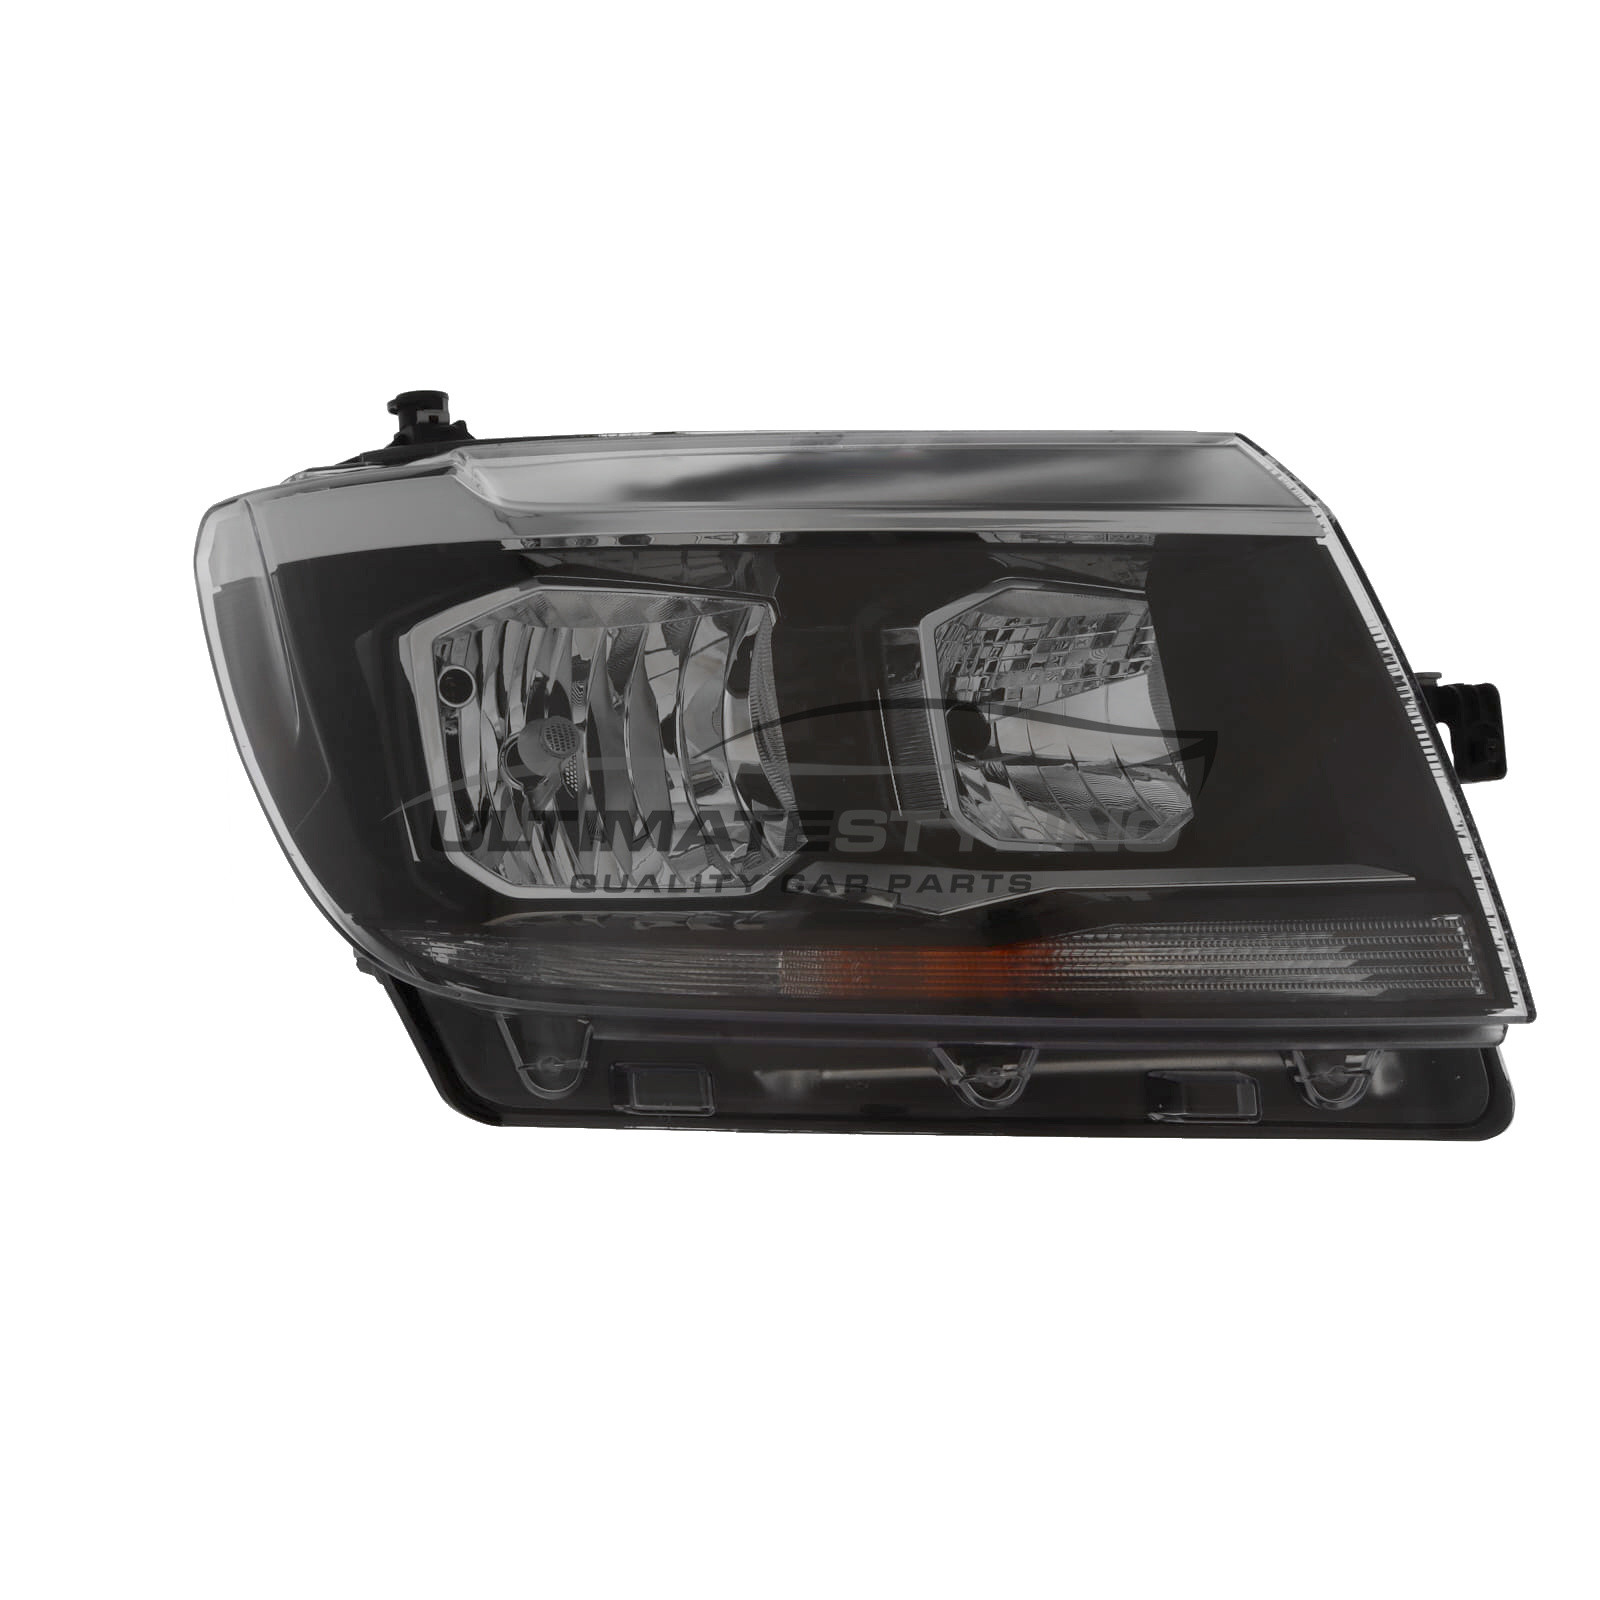 Headlight / Headlamp for VW Crafter